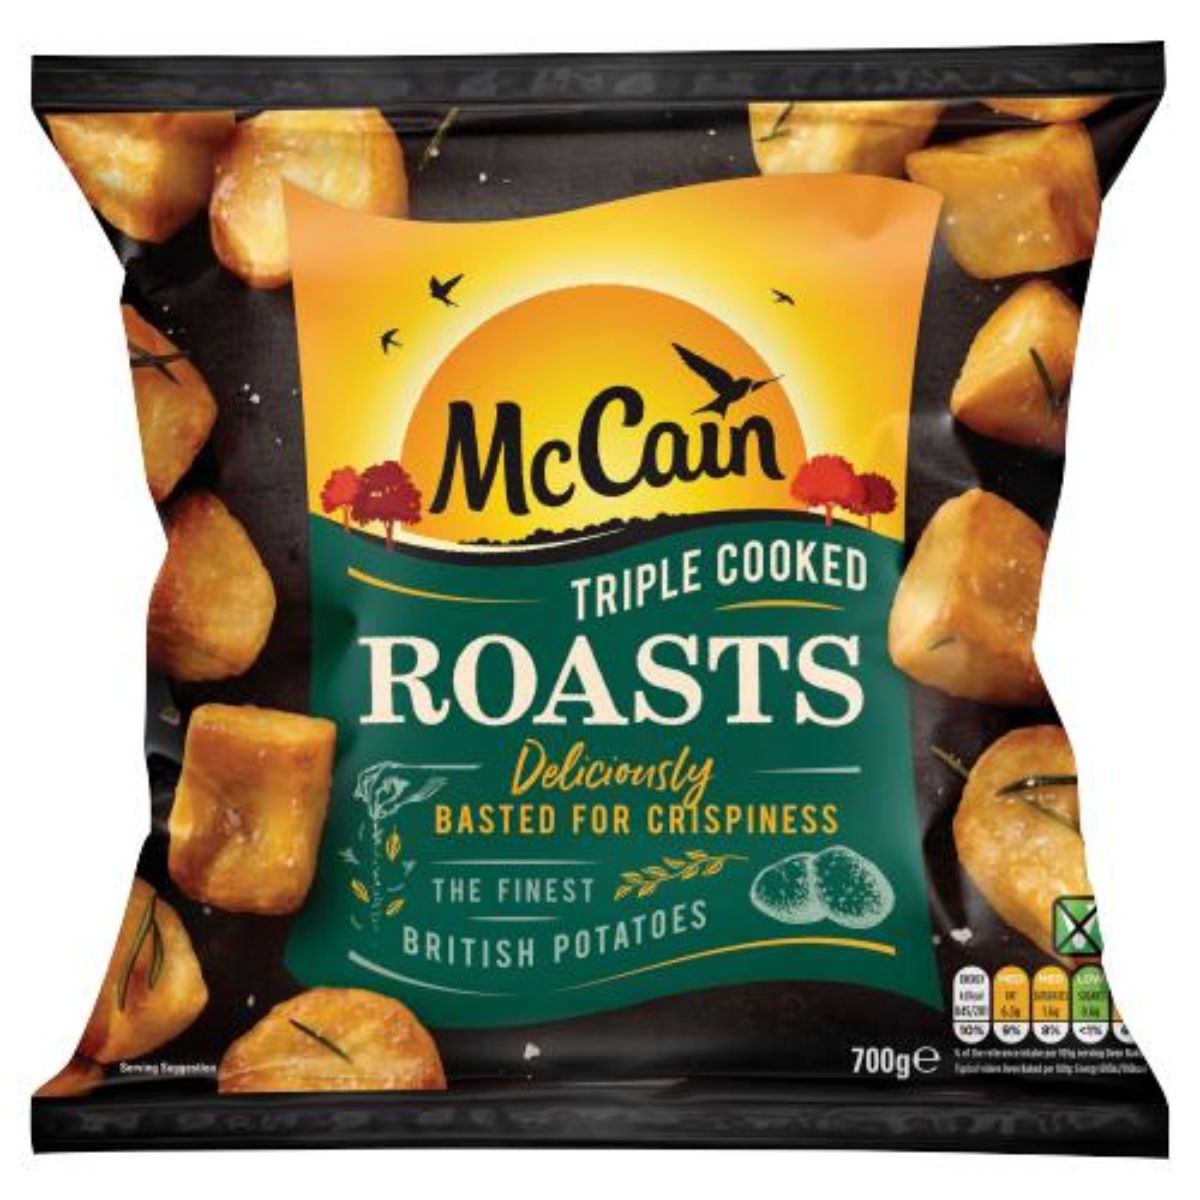 McCain - Triple Cooked Roasts - 700g potatoes.